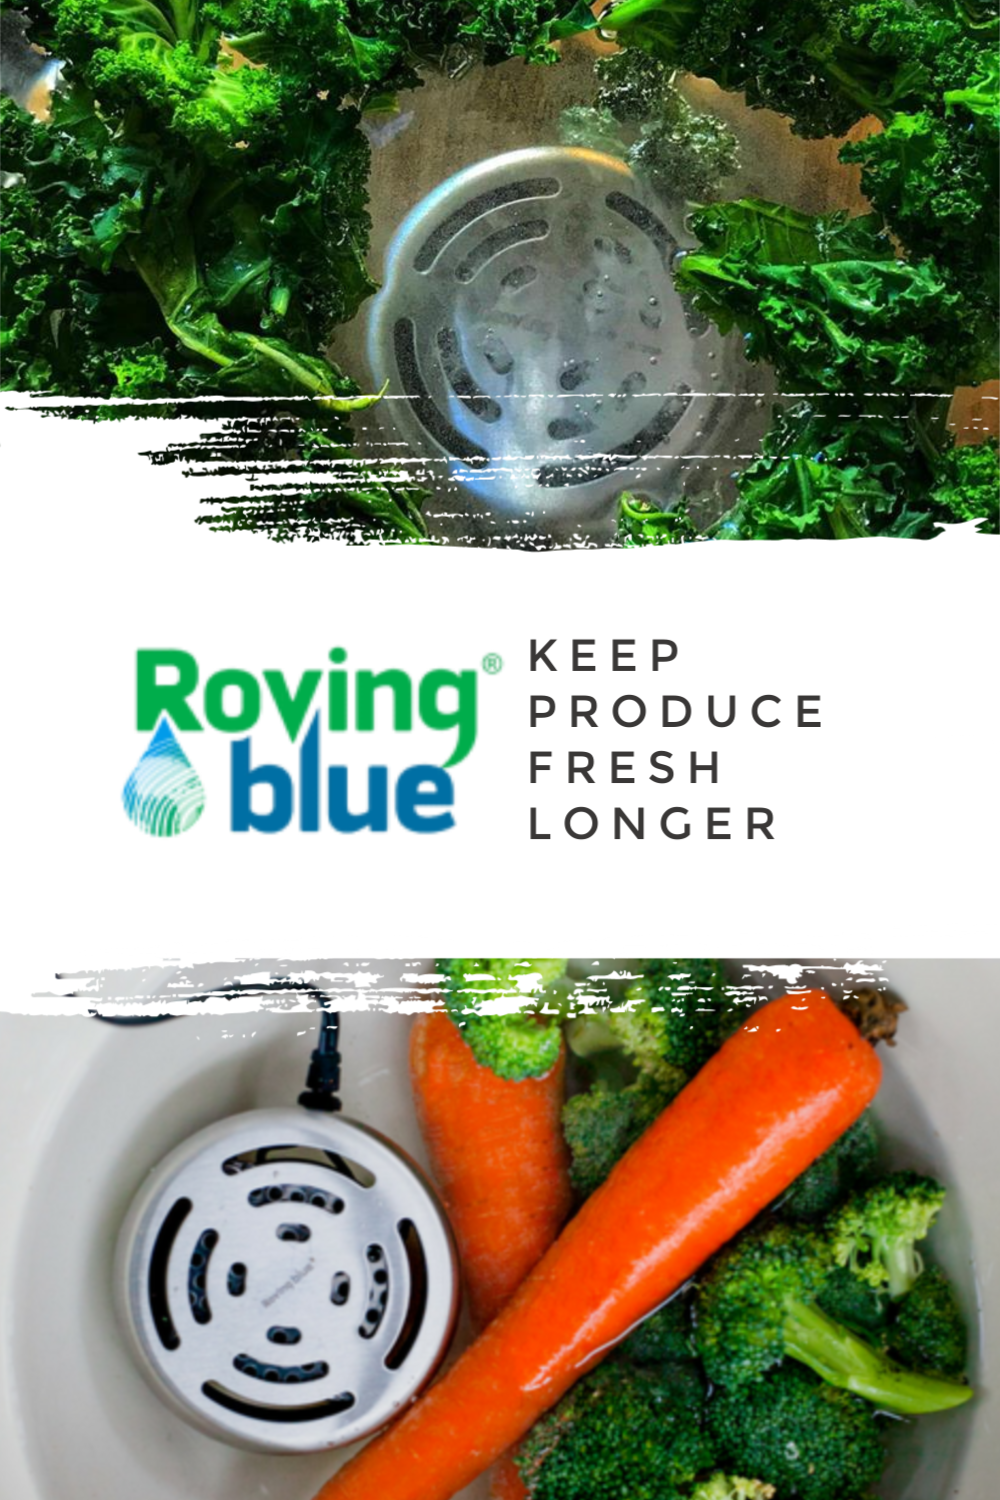 Roving Blue Keep Produce Fresh Longer #Ozone #RovingBlue